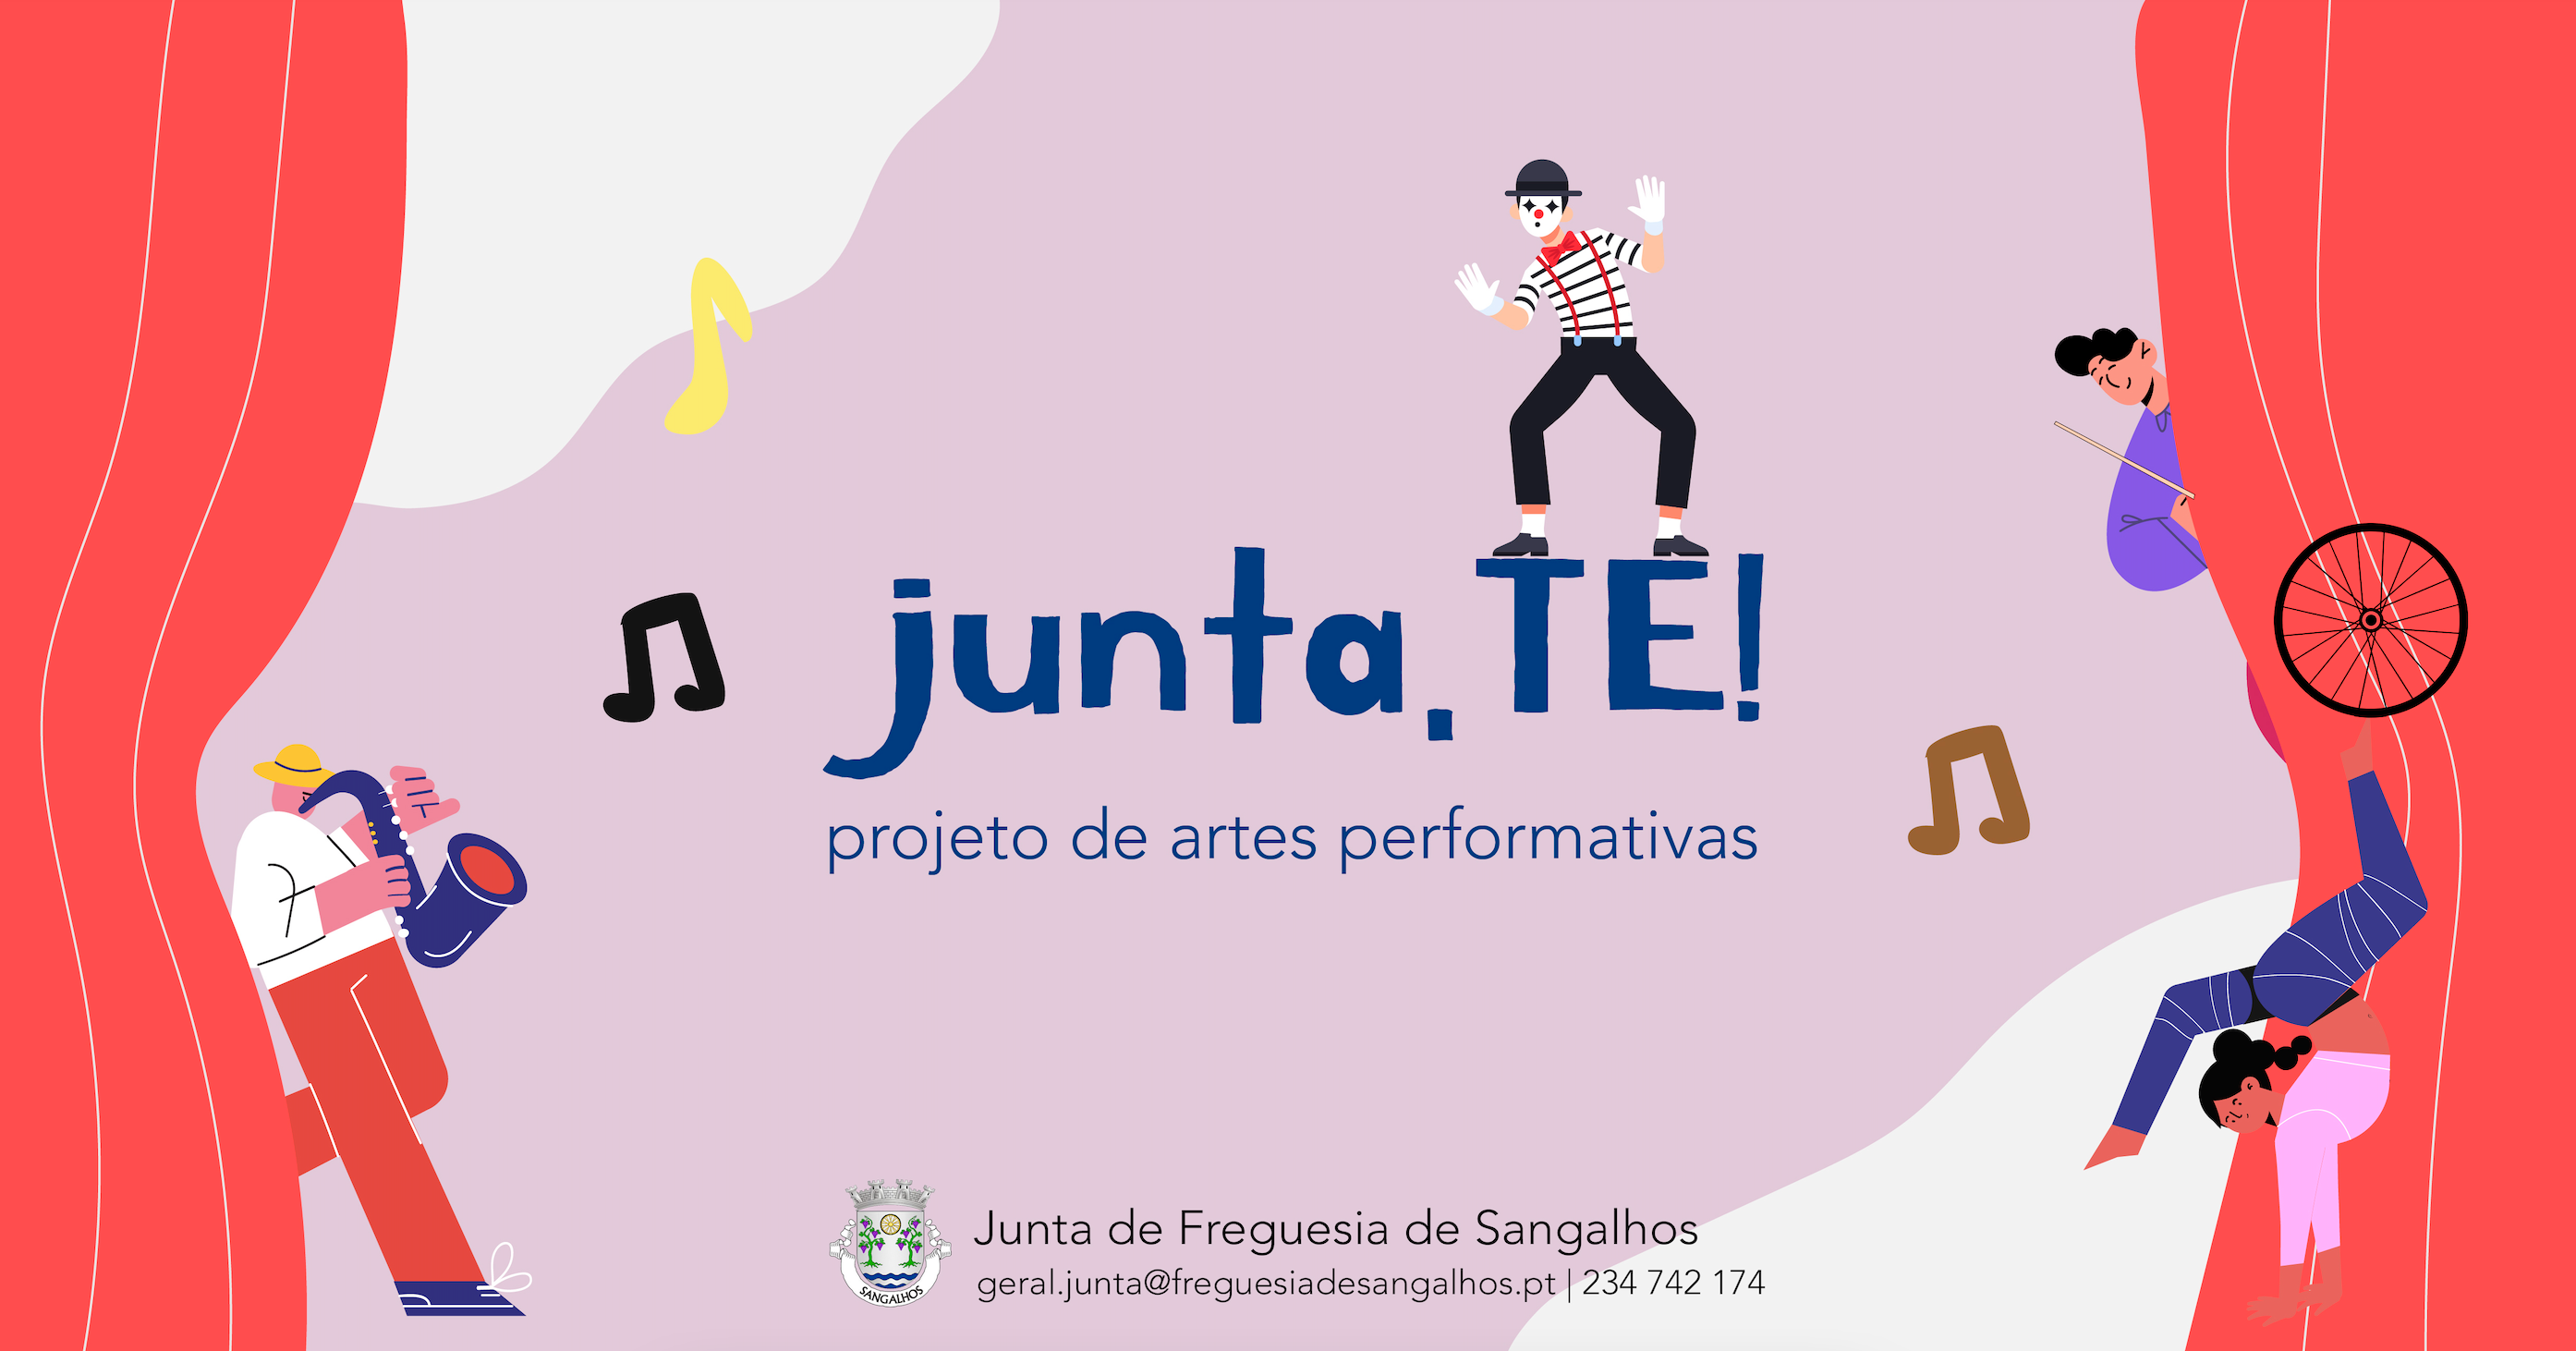 Imagem Projeto Artes performativas Junta, TE!